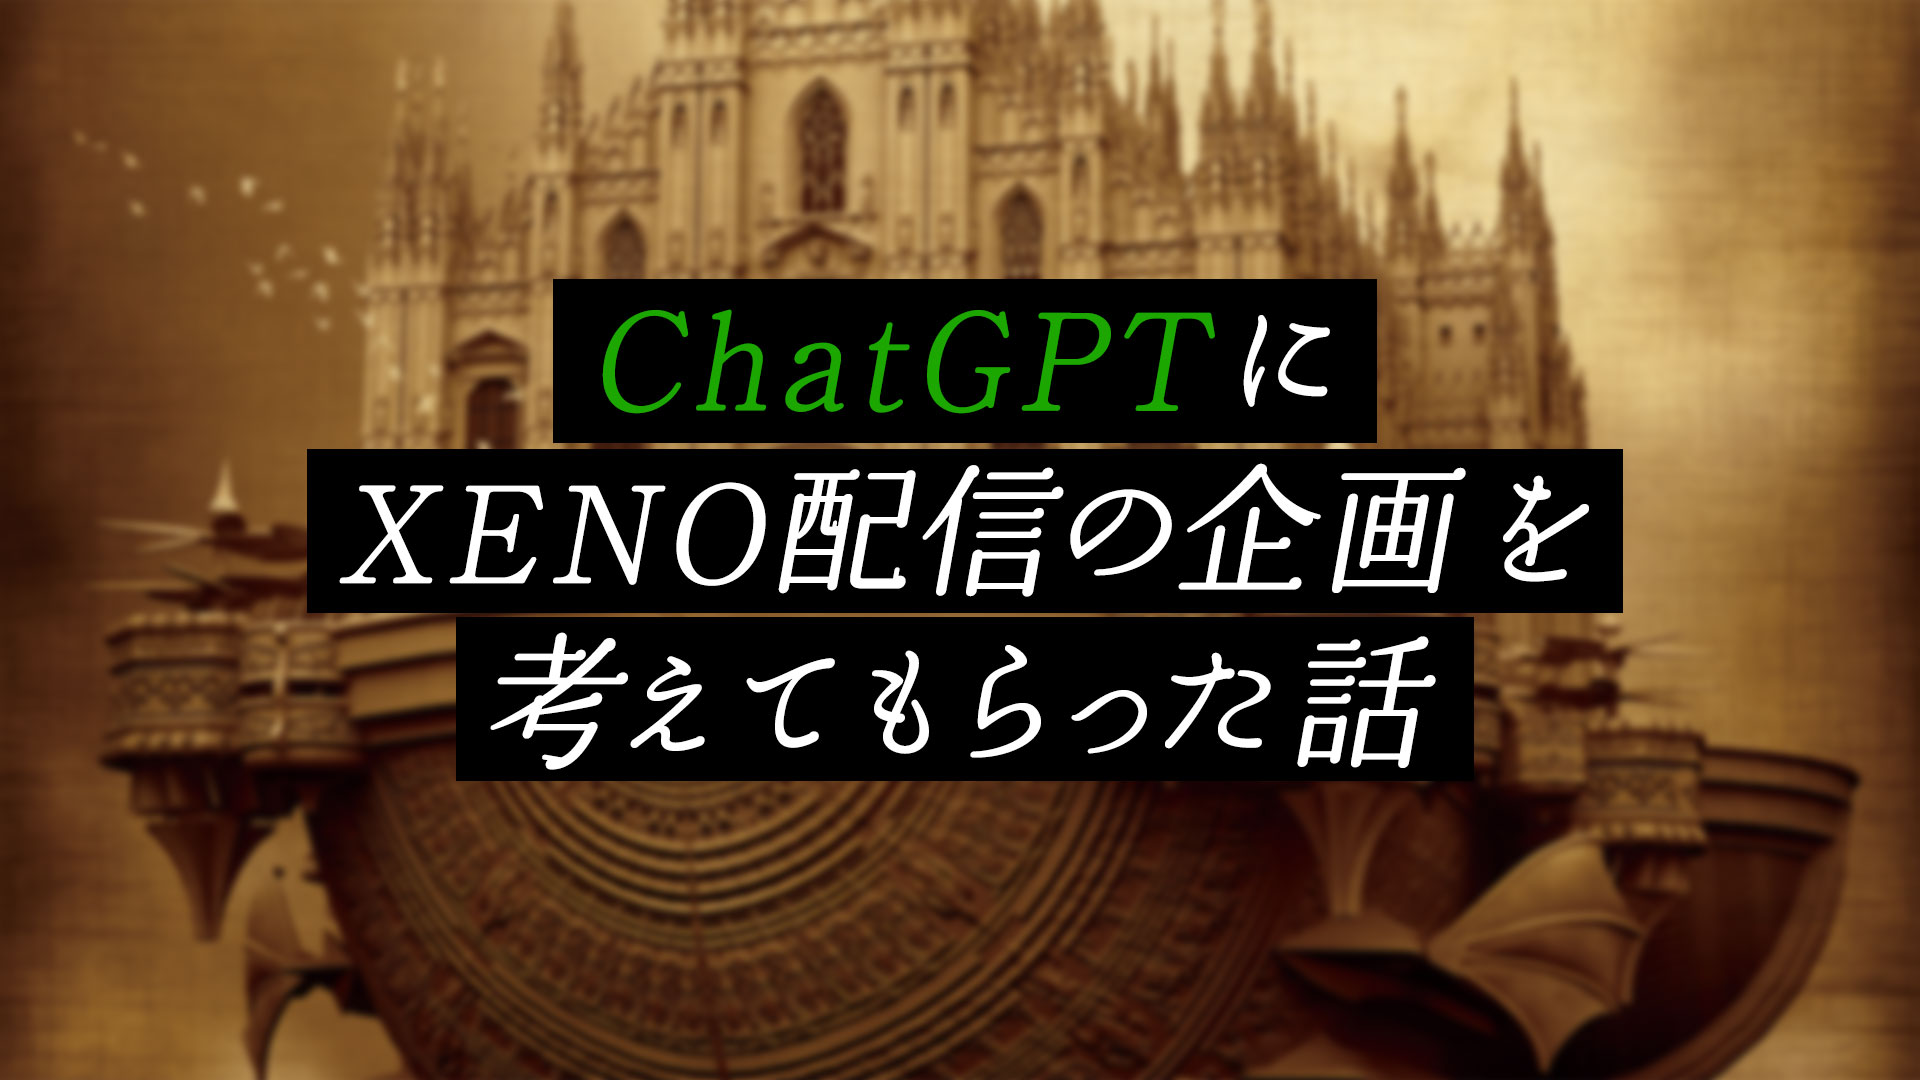 【#pg授業補習】ChatGPTに「XENOの読み合わせ配信」の企画を考えてもらった